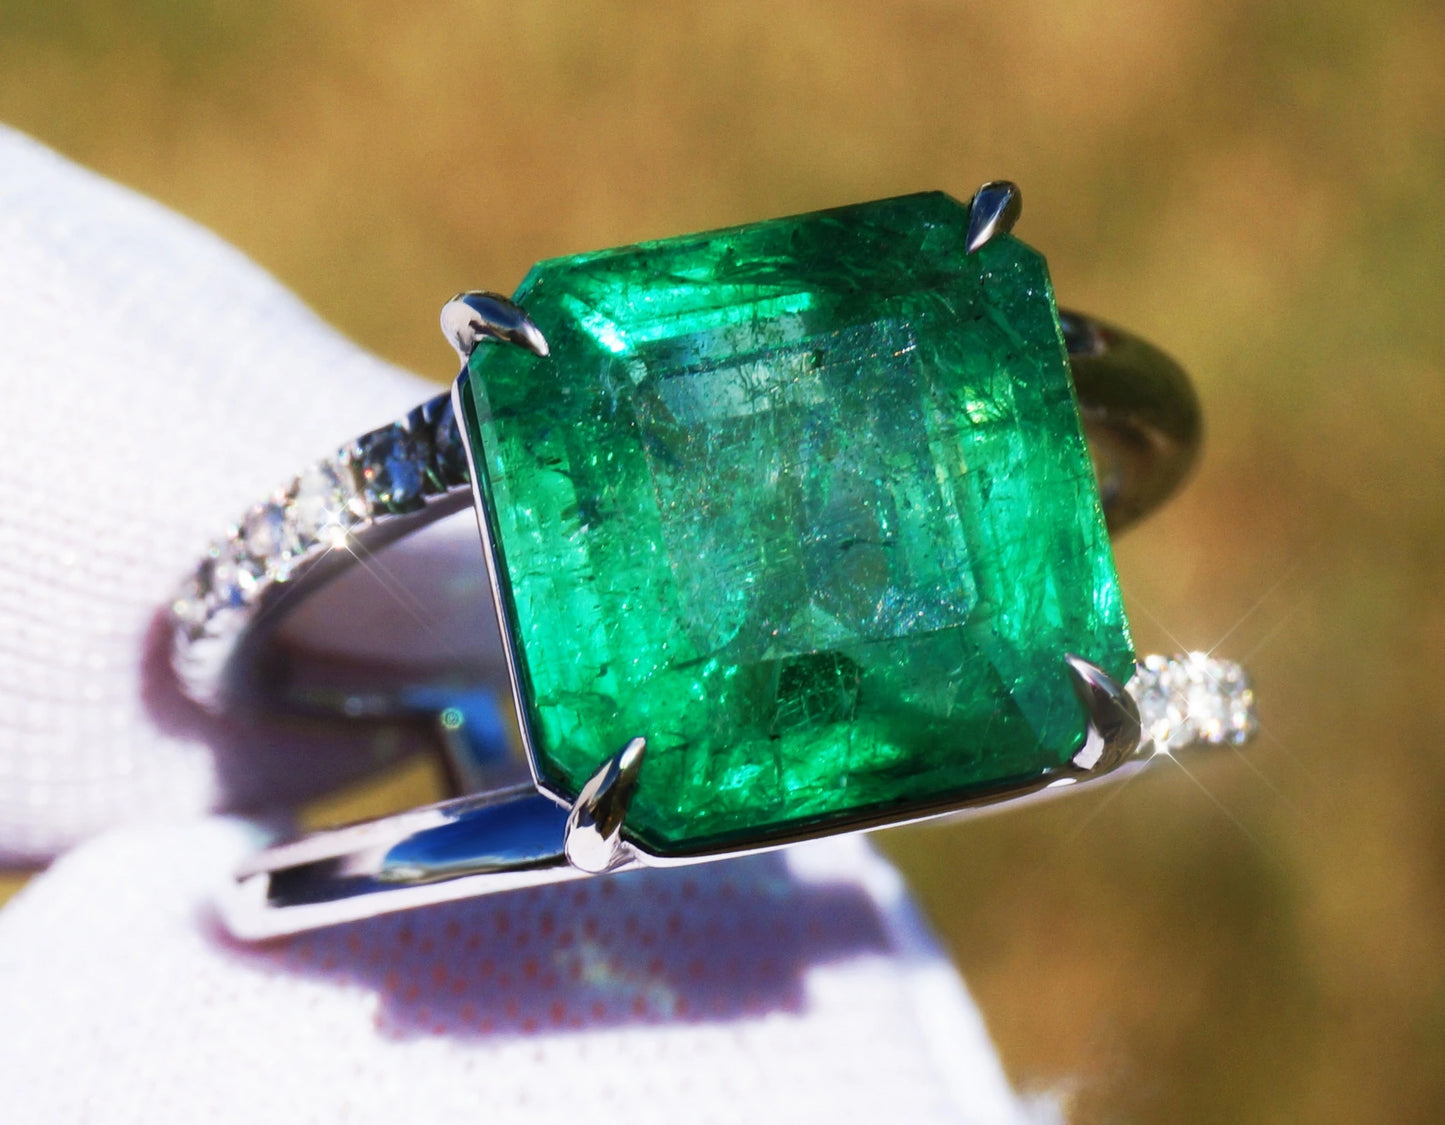 ring Emerald diamond white gold 14k gia certified 6.14ctw split shank